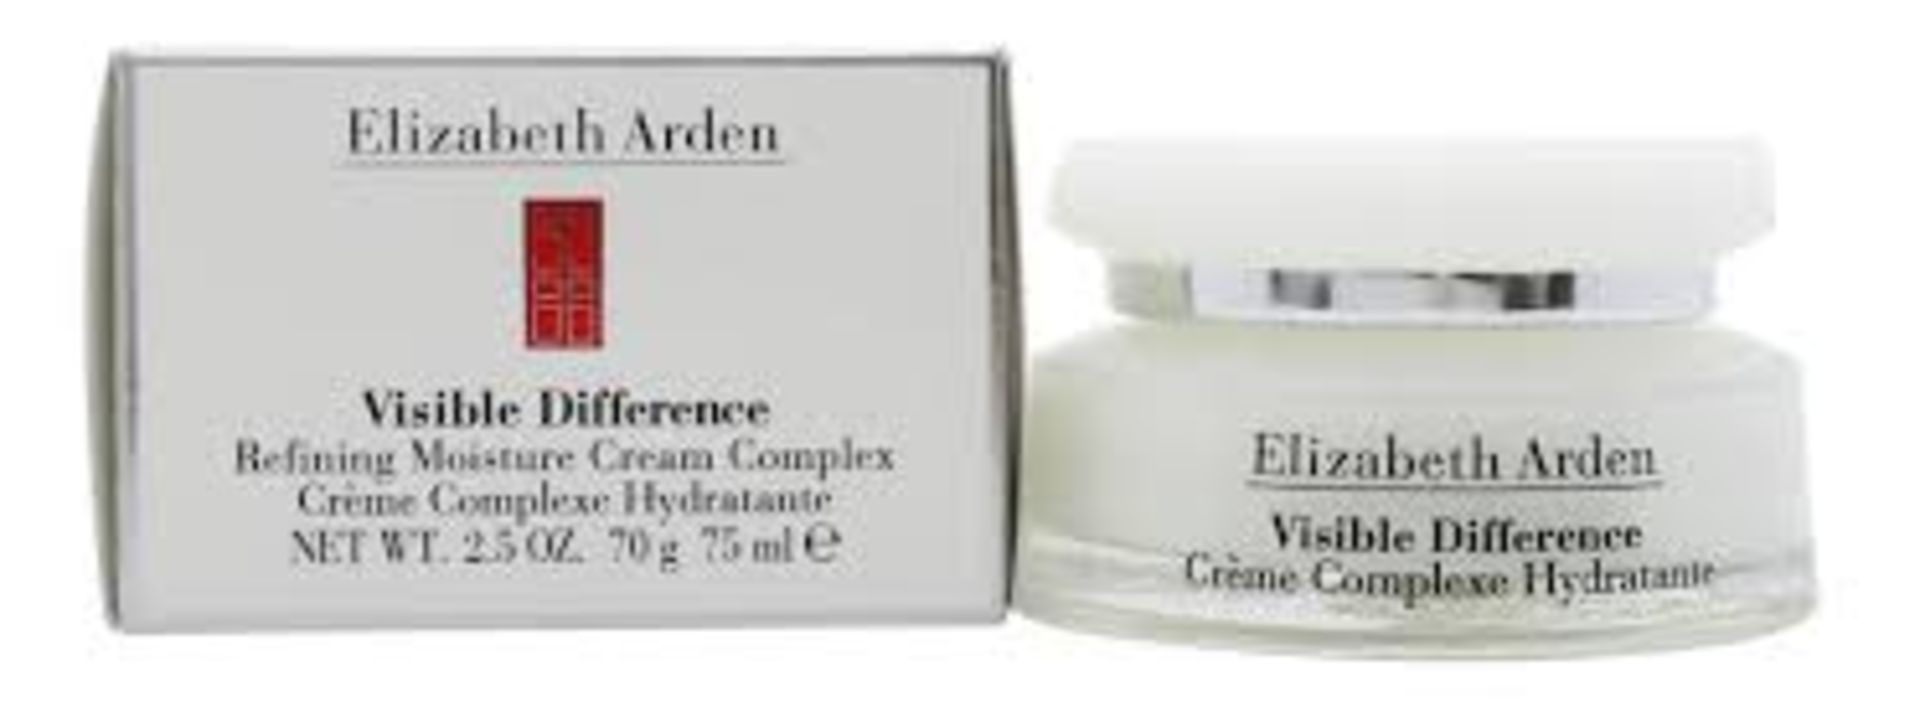 V Brand New Elizabeth Arden Visible Difference Refining Moisture Cream Complex 75 ml - Price on